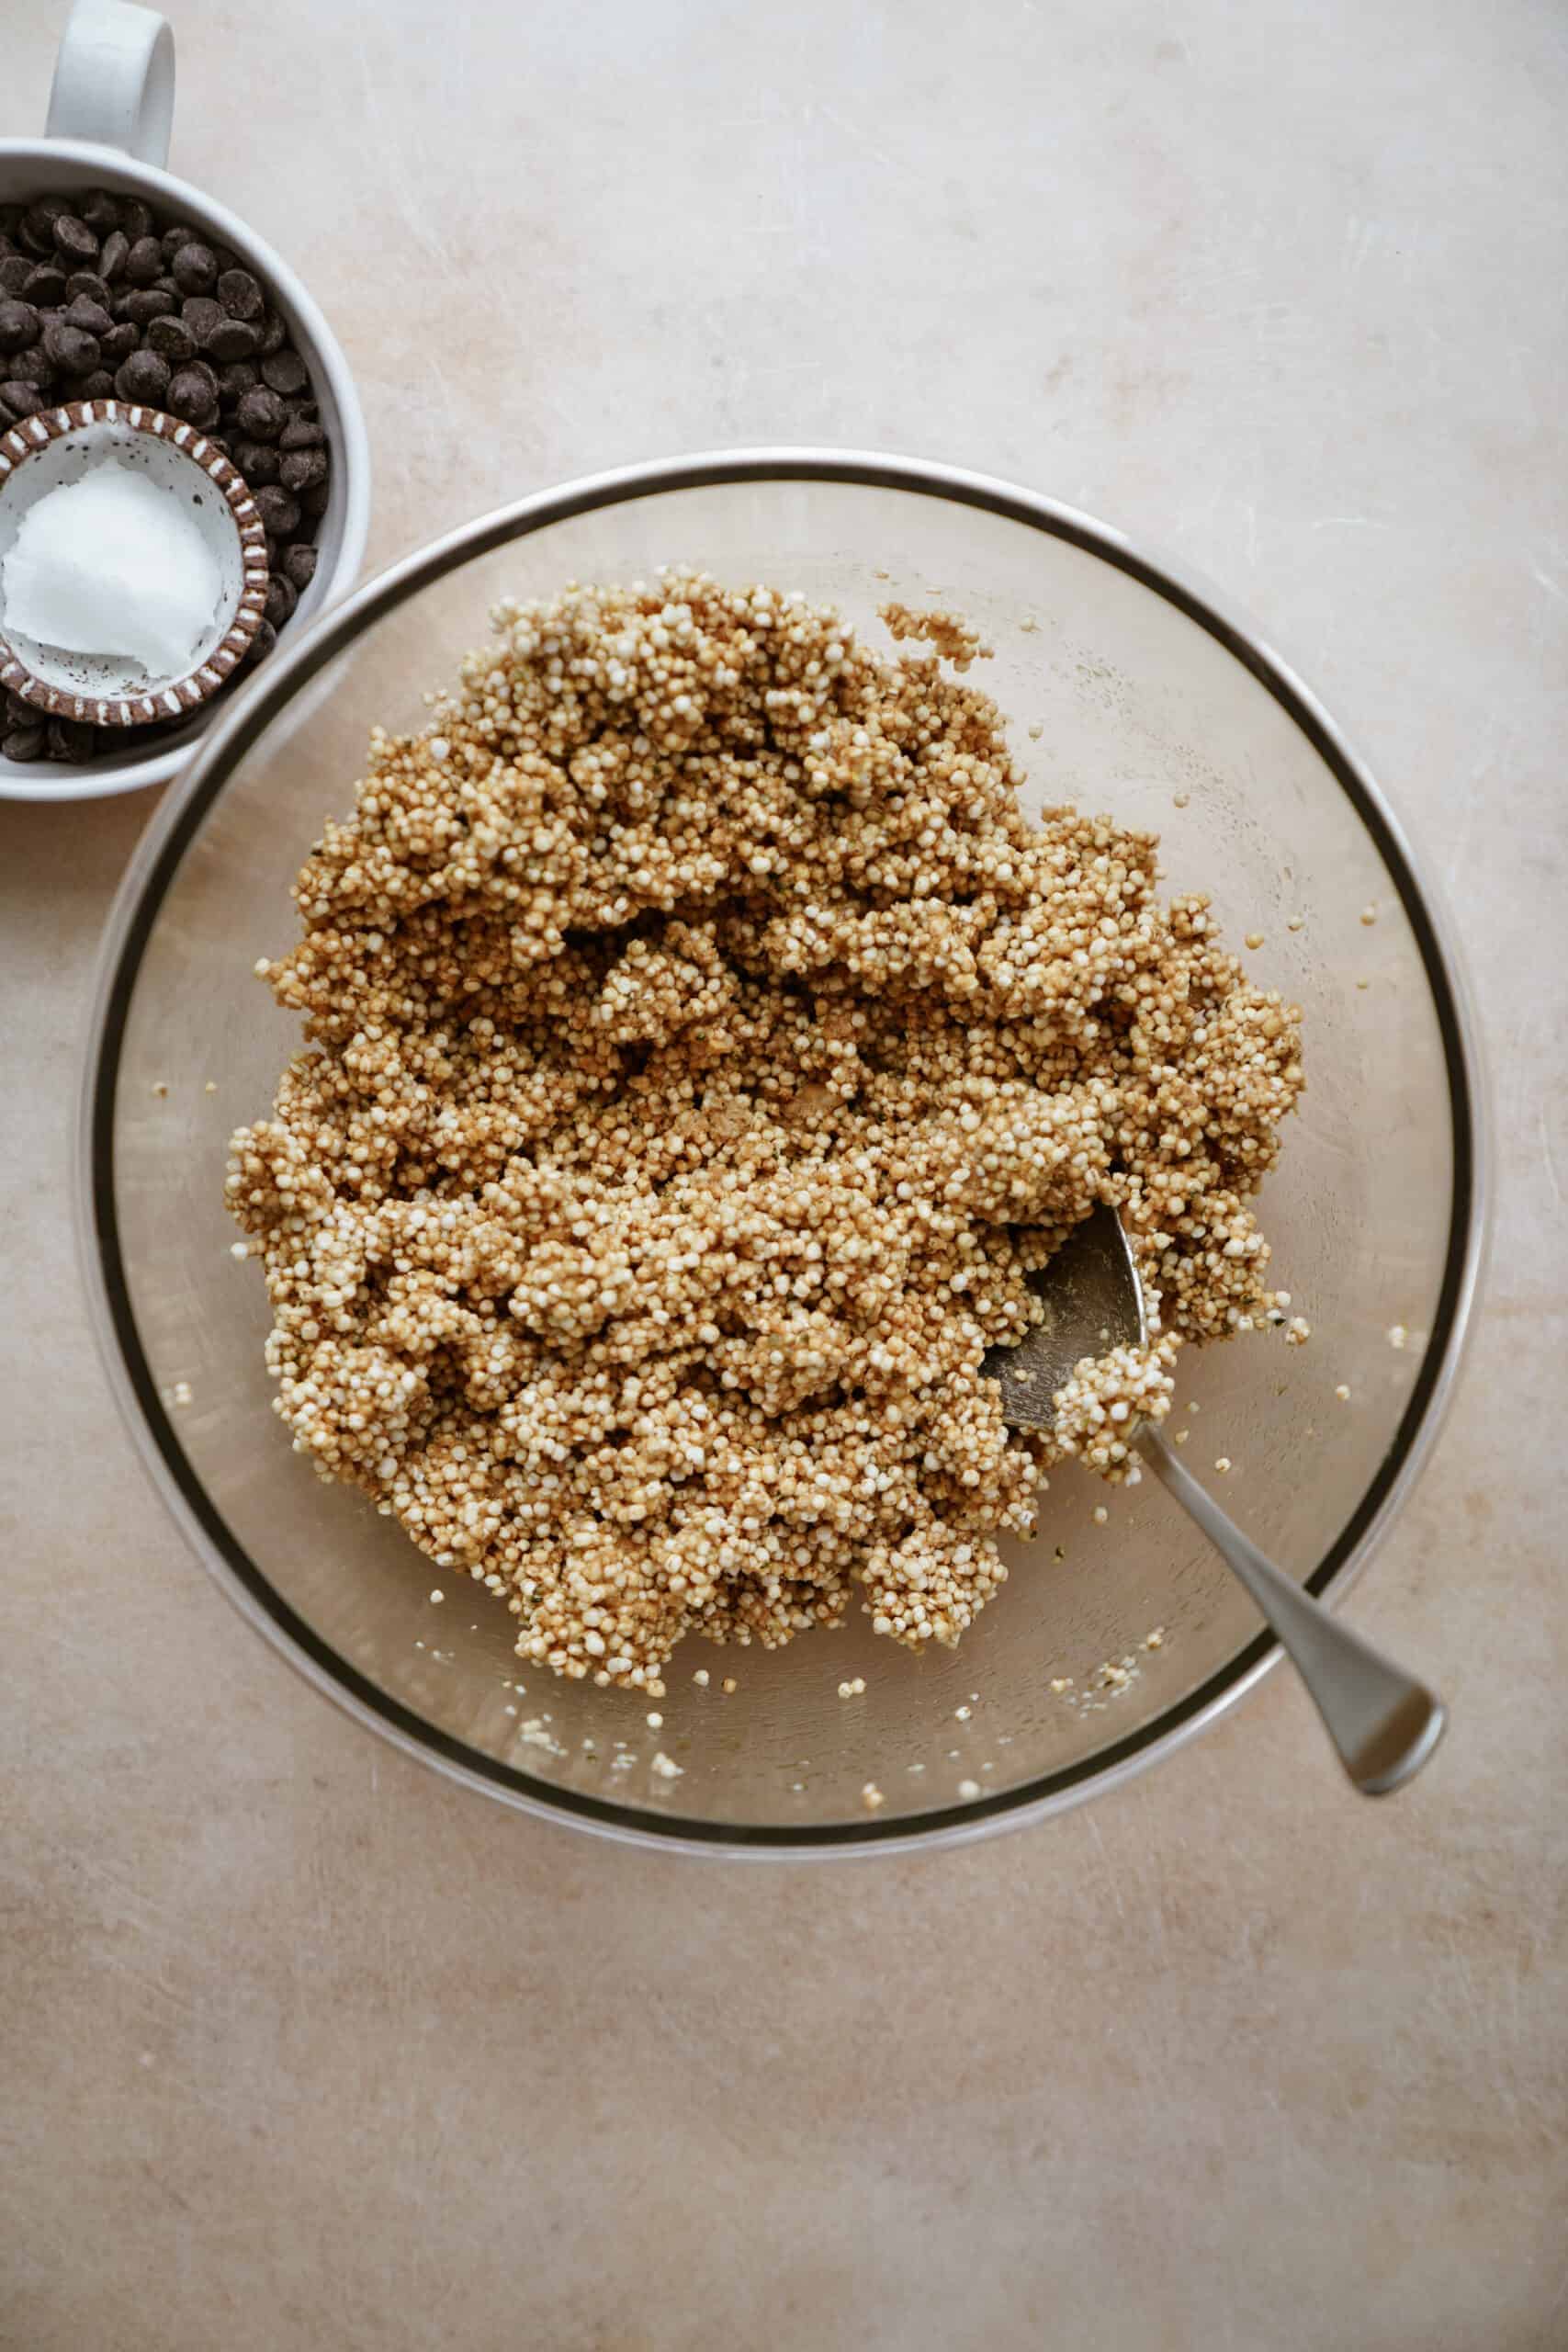  puffed quinoa bar ingredient in bowl